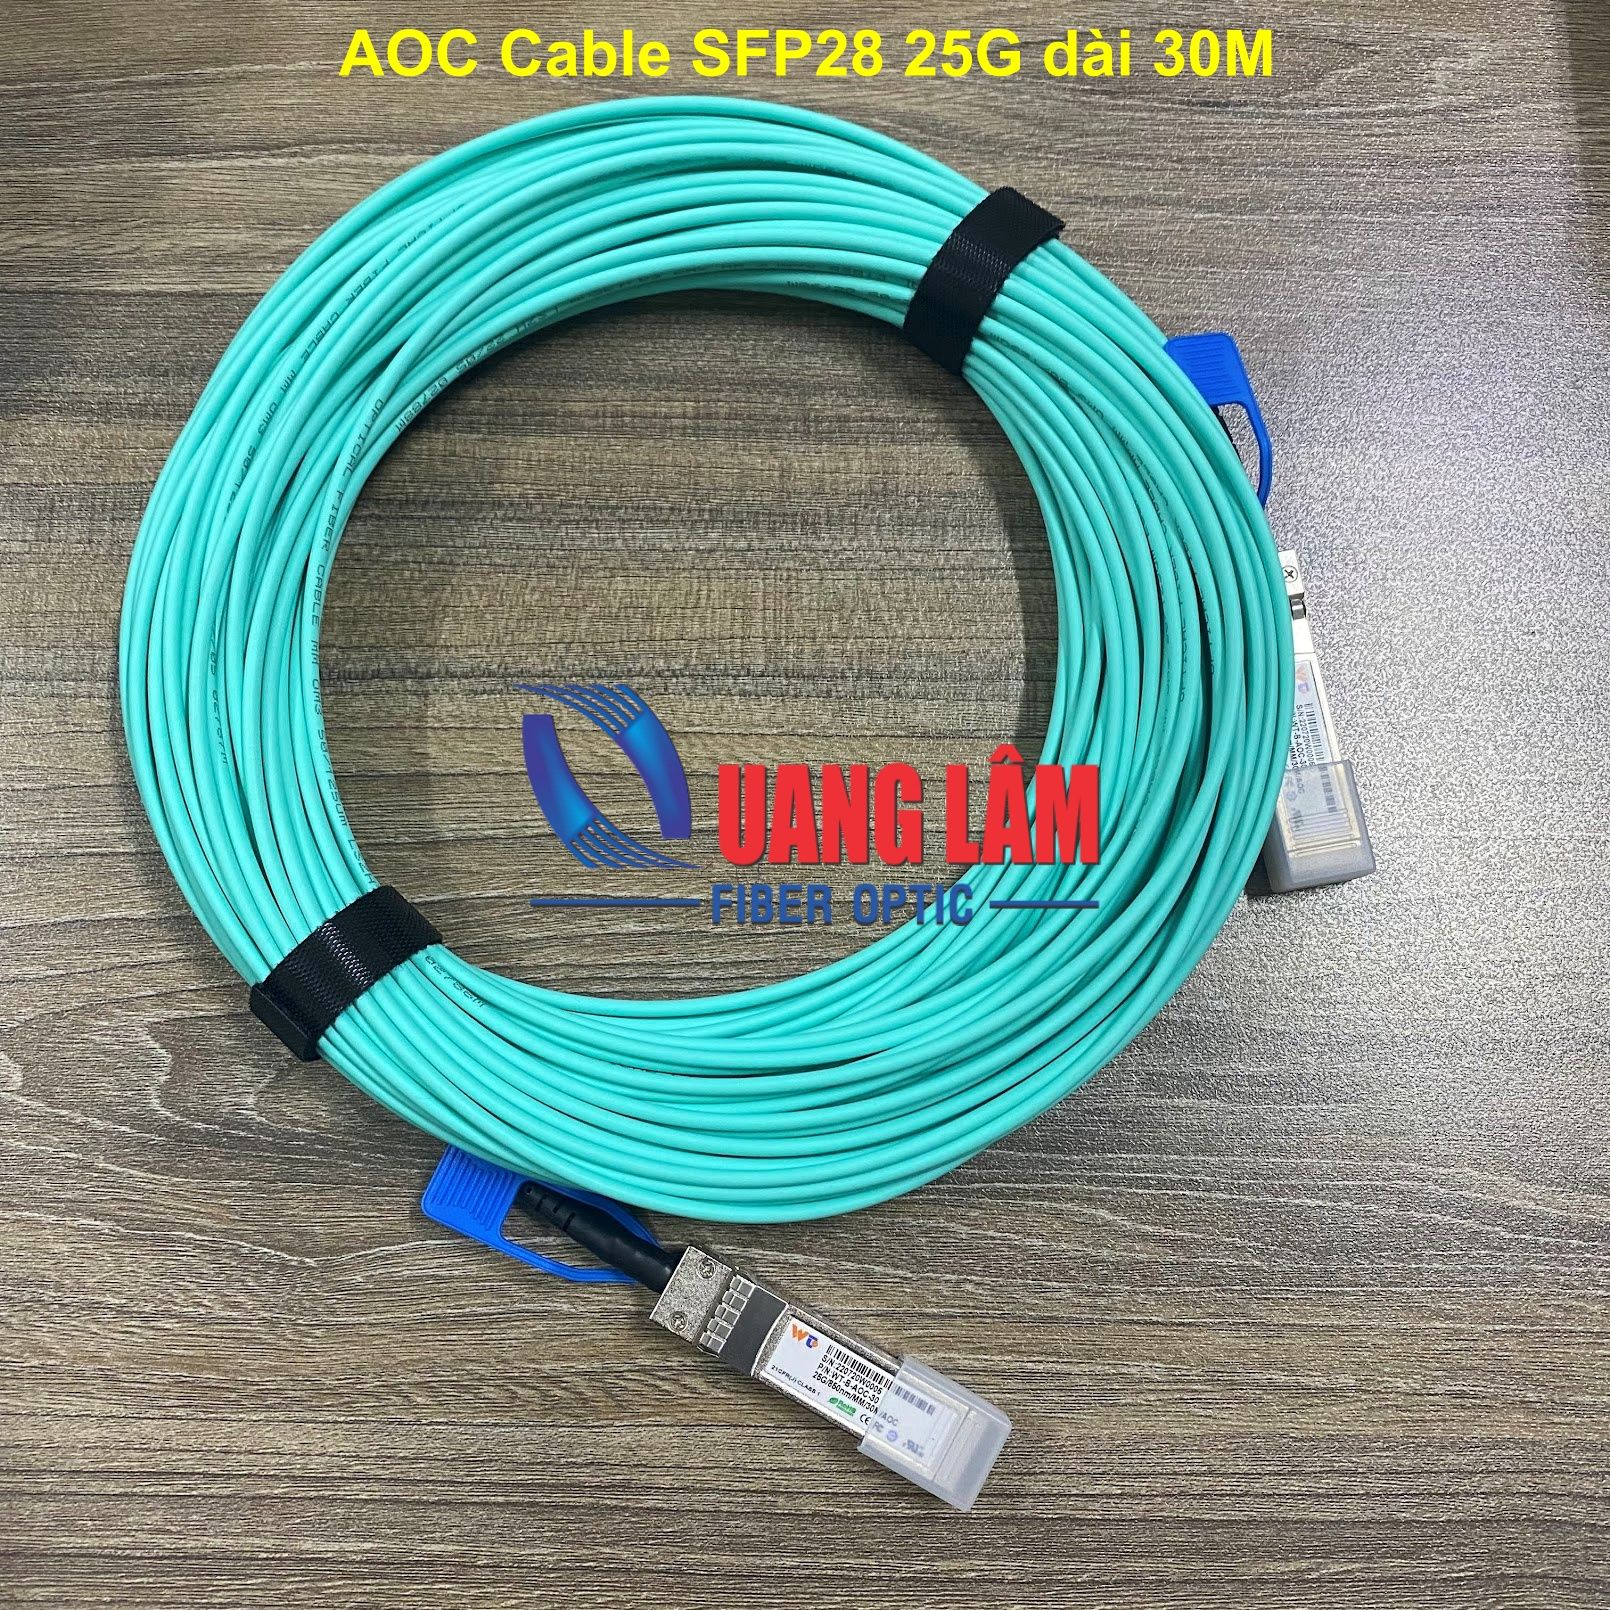 Cable AOC SFP28 to SFP28 25G dài 30M